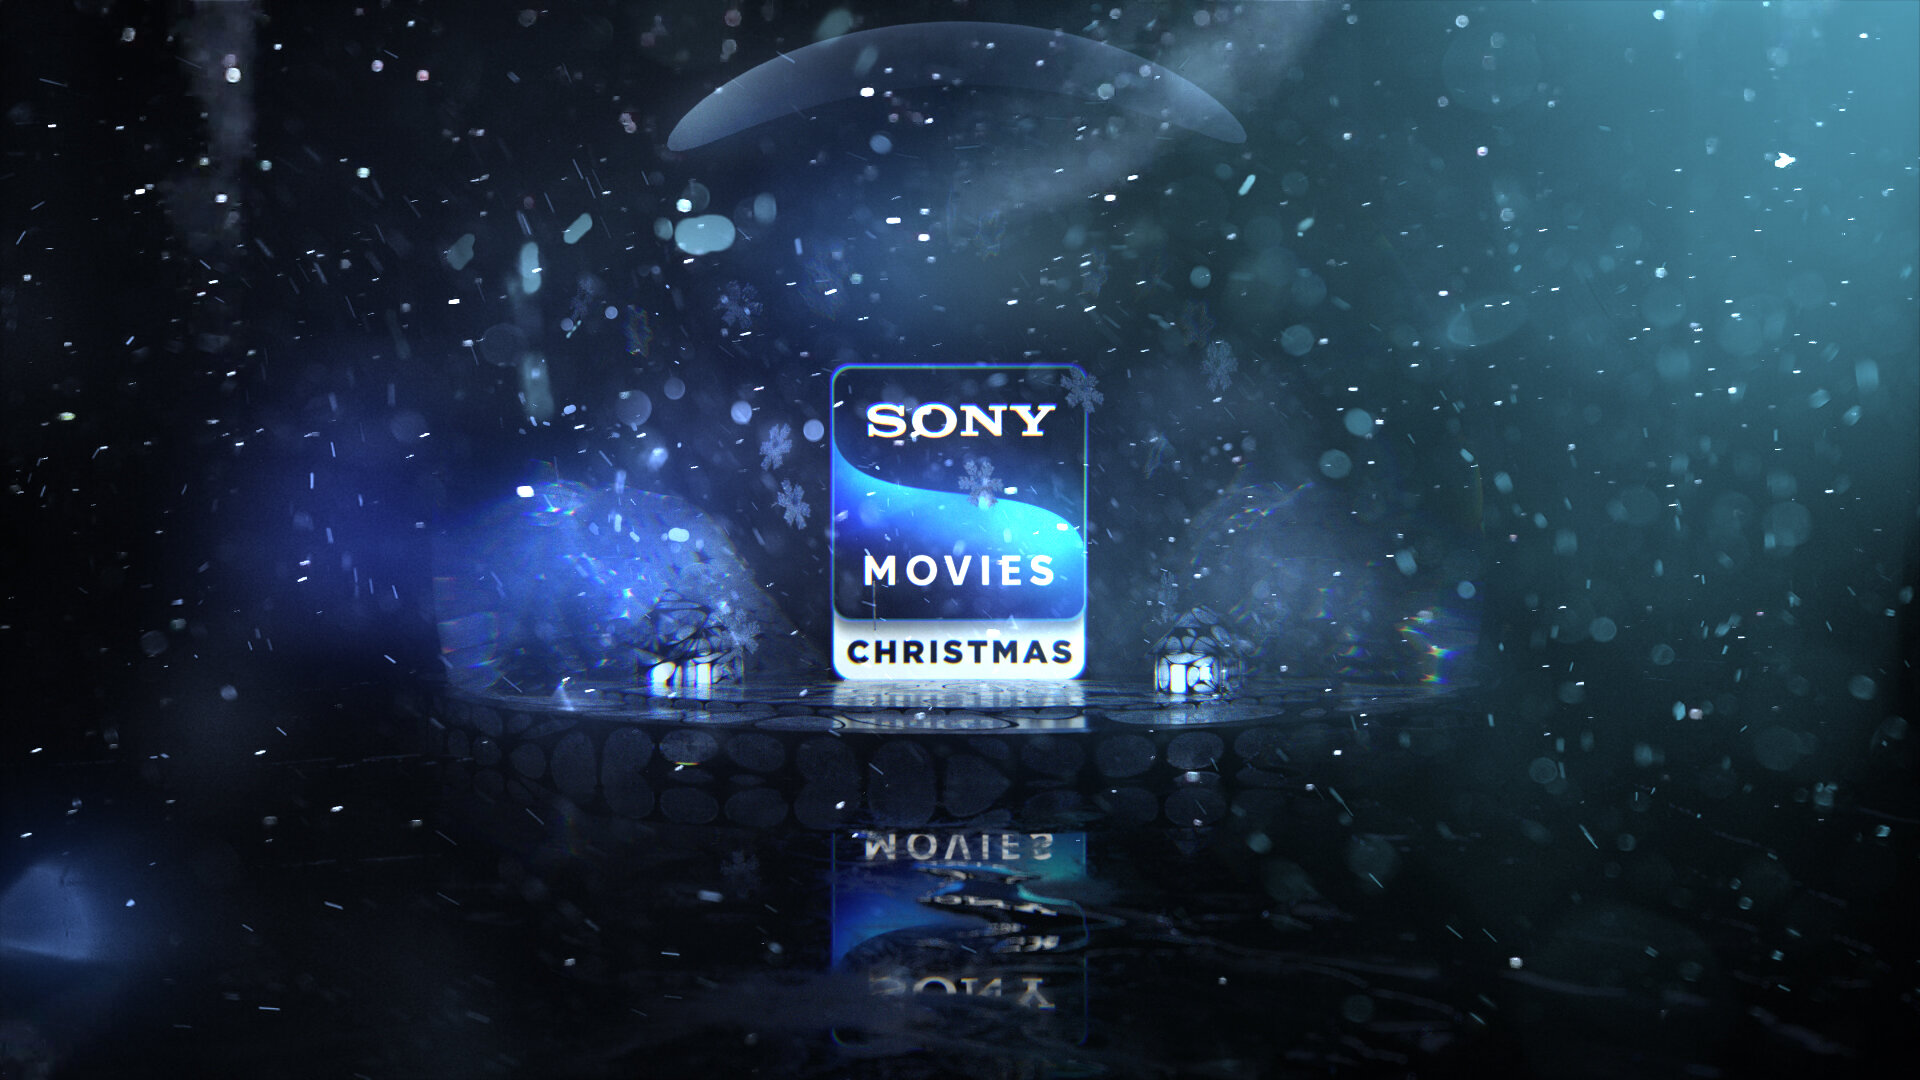 Sony_Christmas_003.jpg